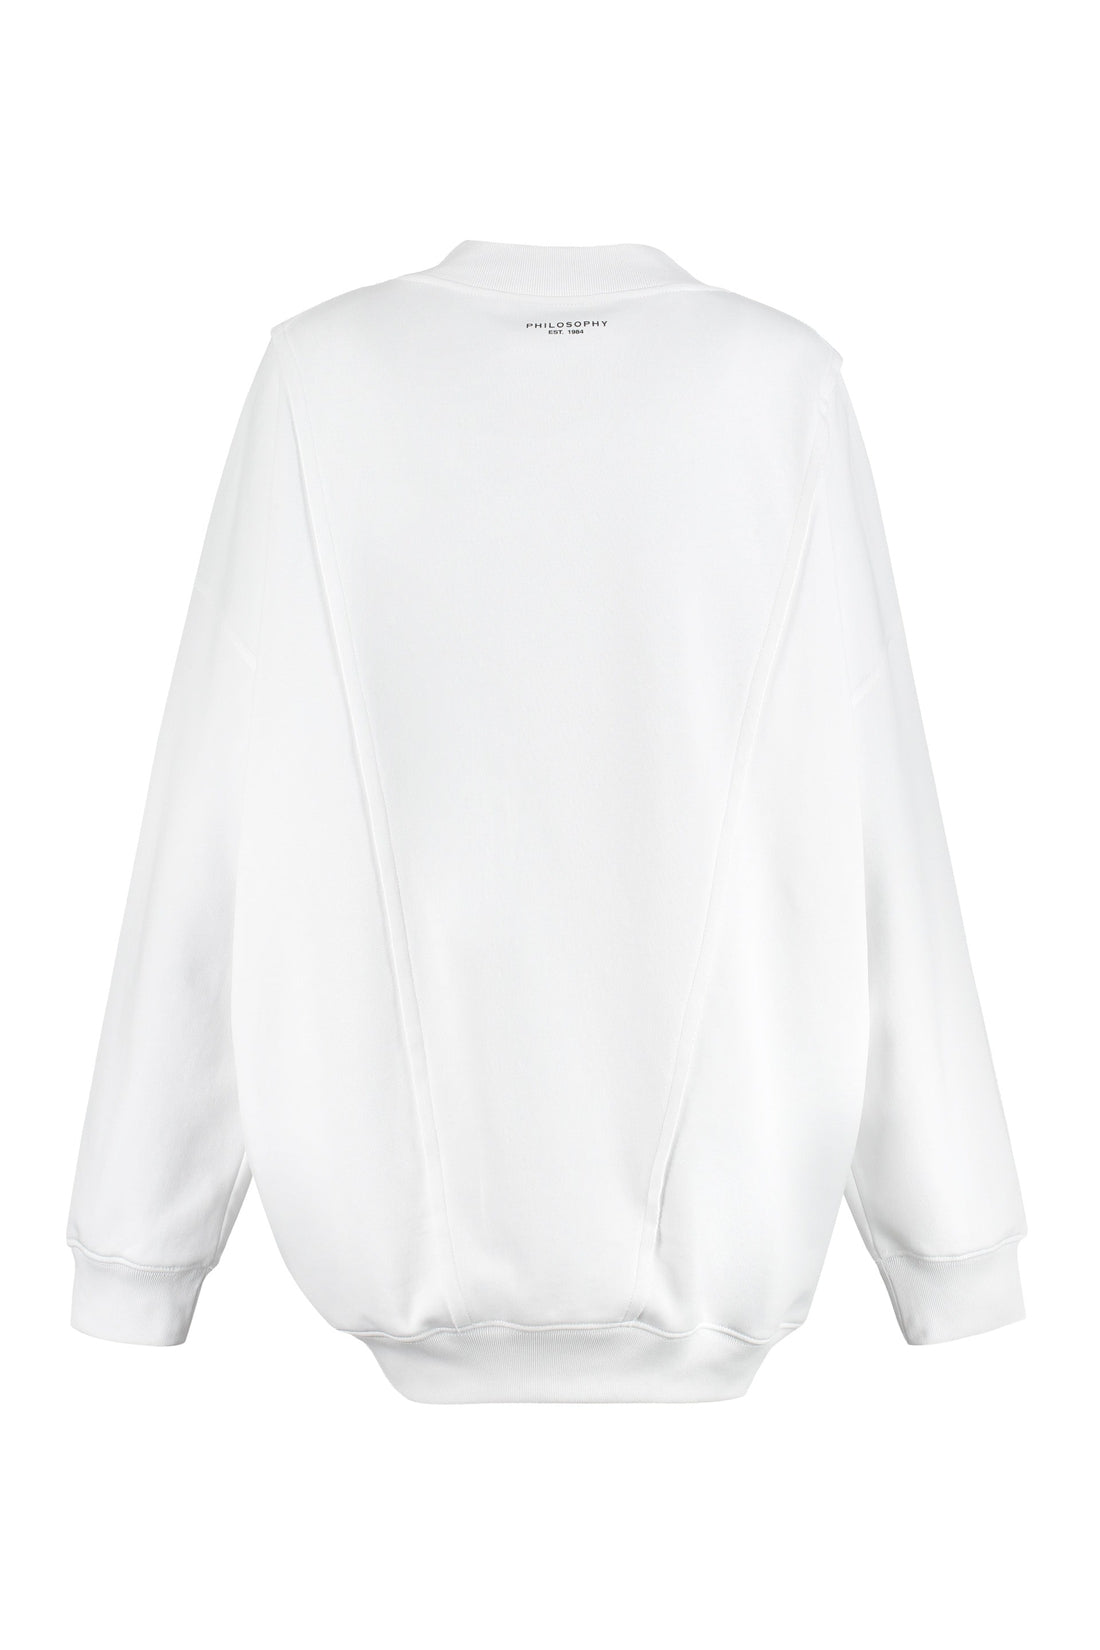 Philosophy di Lorenzo Serafini-OUTLET-SALE-Oversize cotton sweatshirt-ARCHIVIST